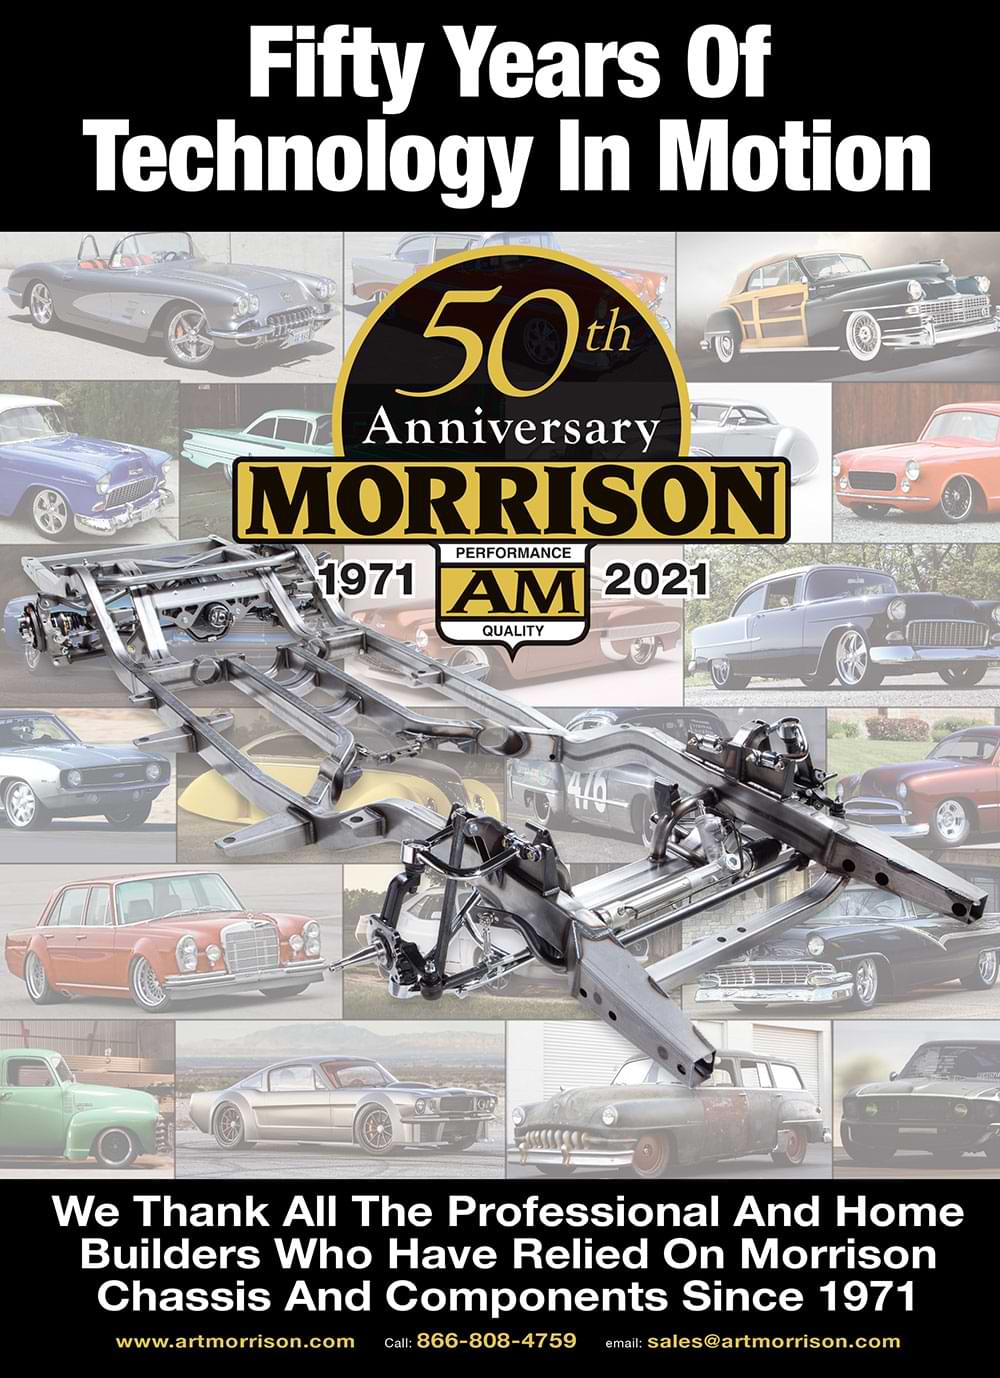 50th Anniversary Morrison Advertisement